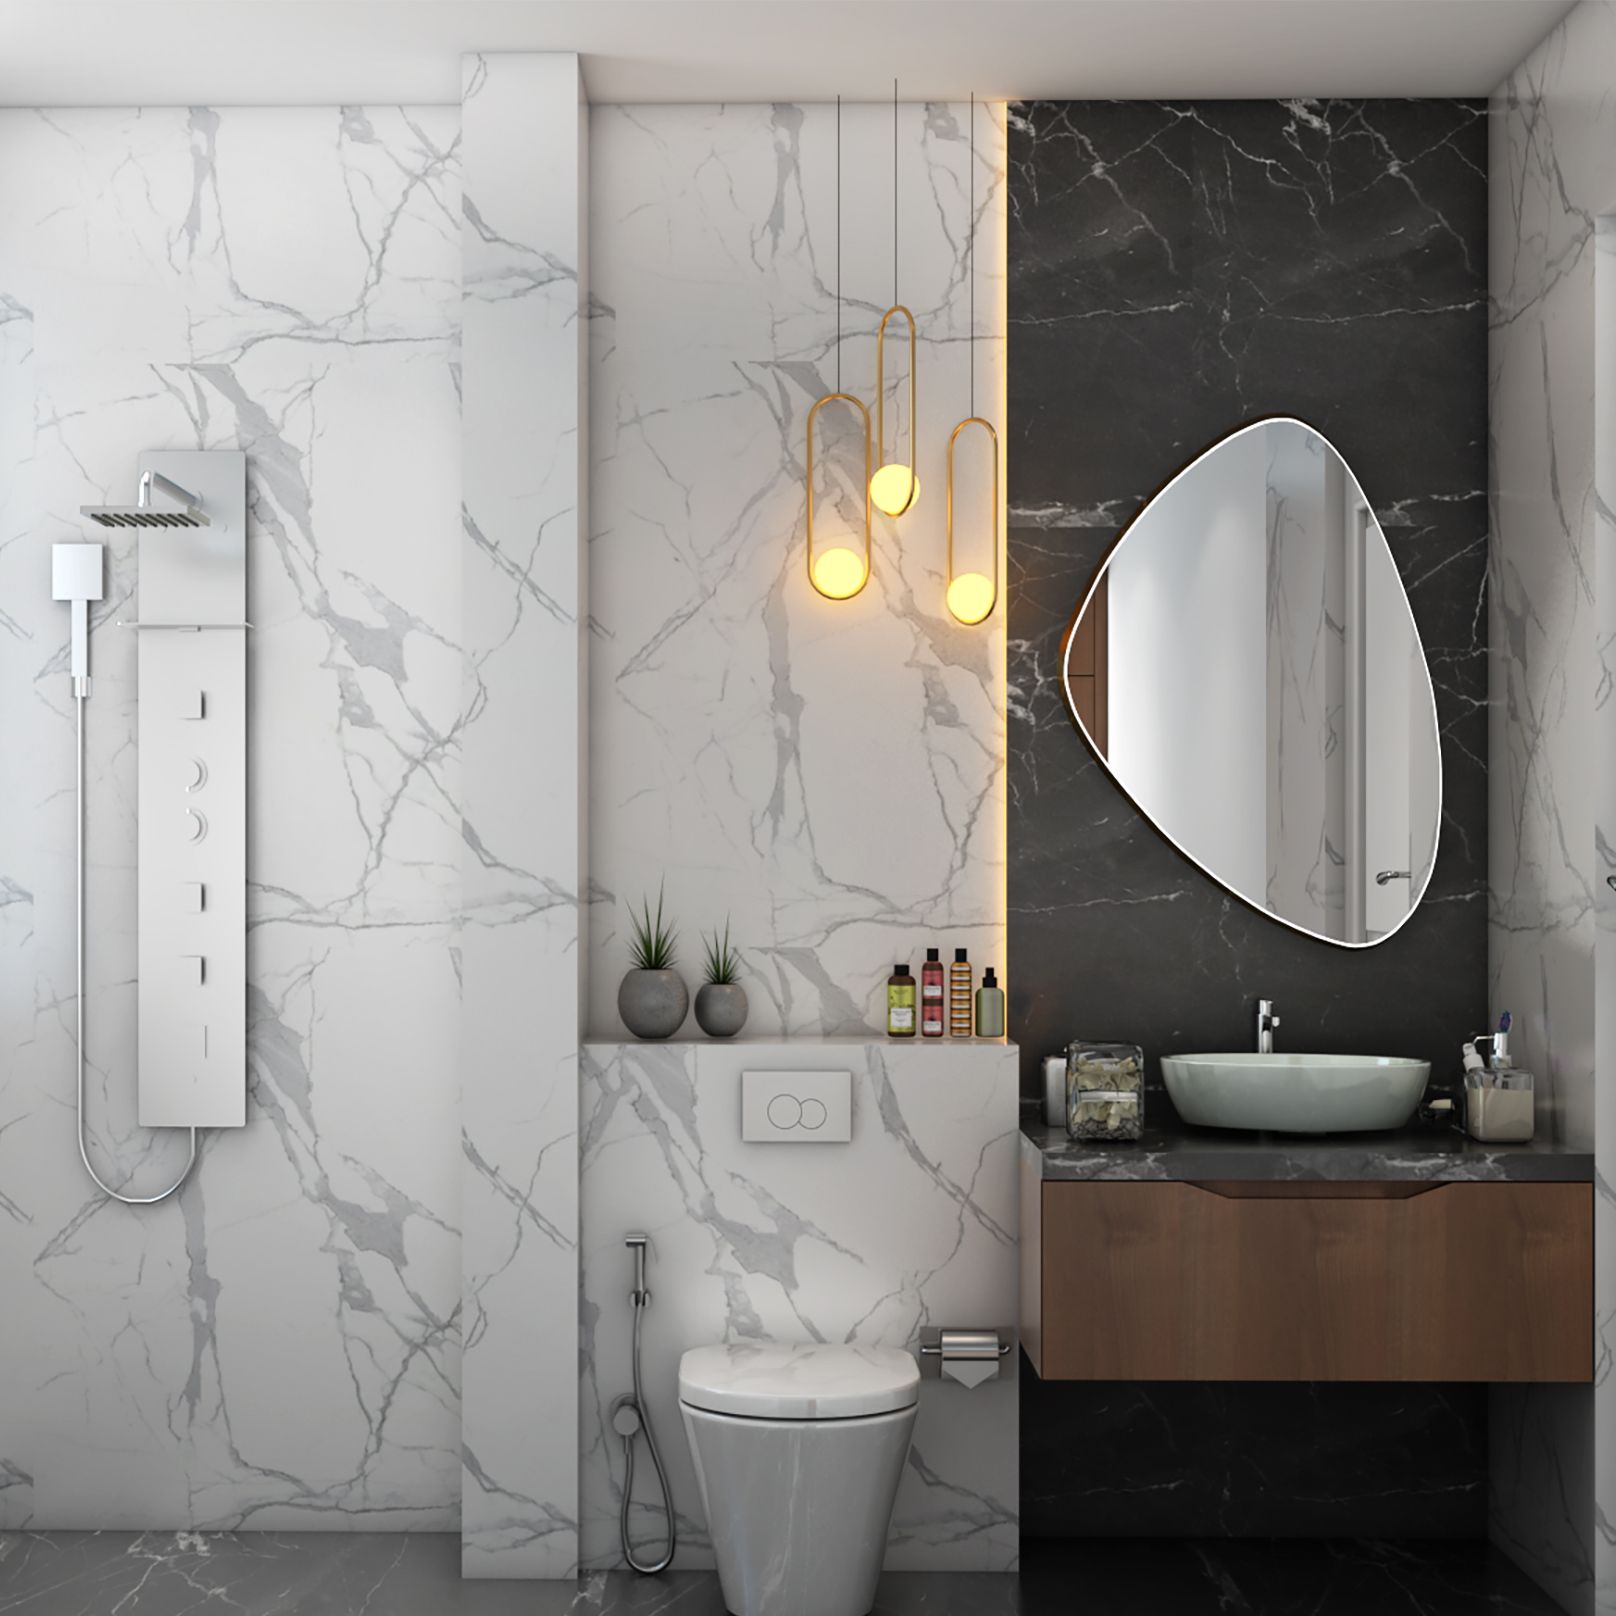 Kitchen & Bathroom Design Ideas & Decor Tips | Goodhomes.co.in